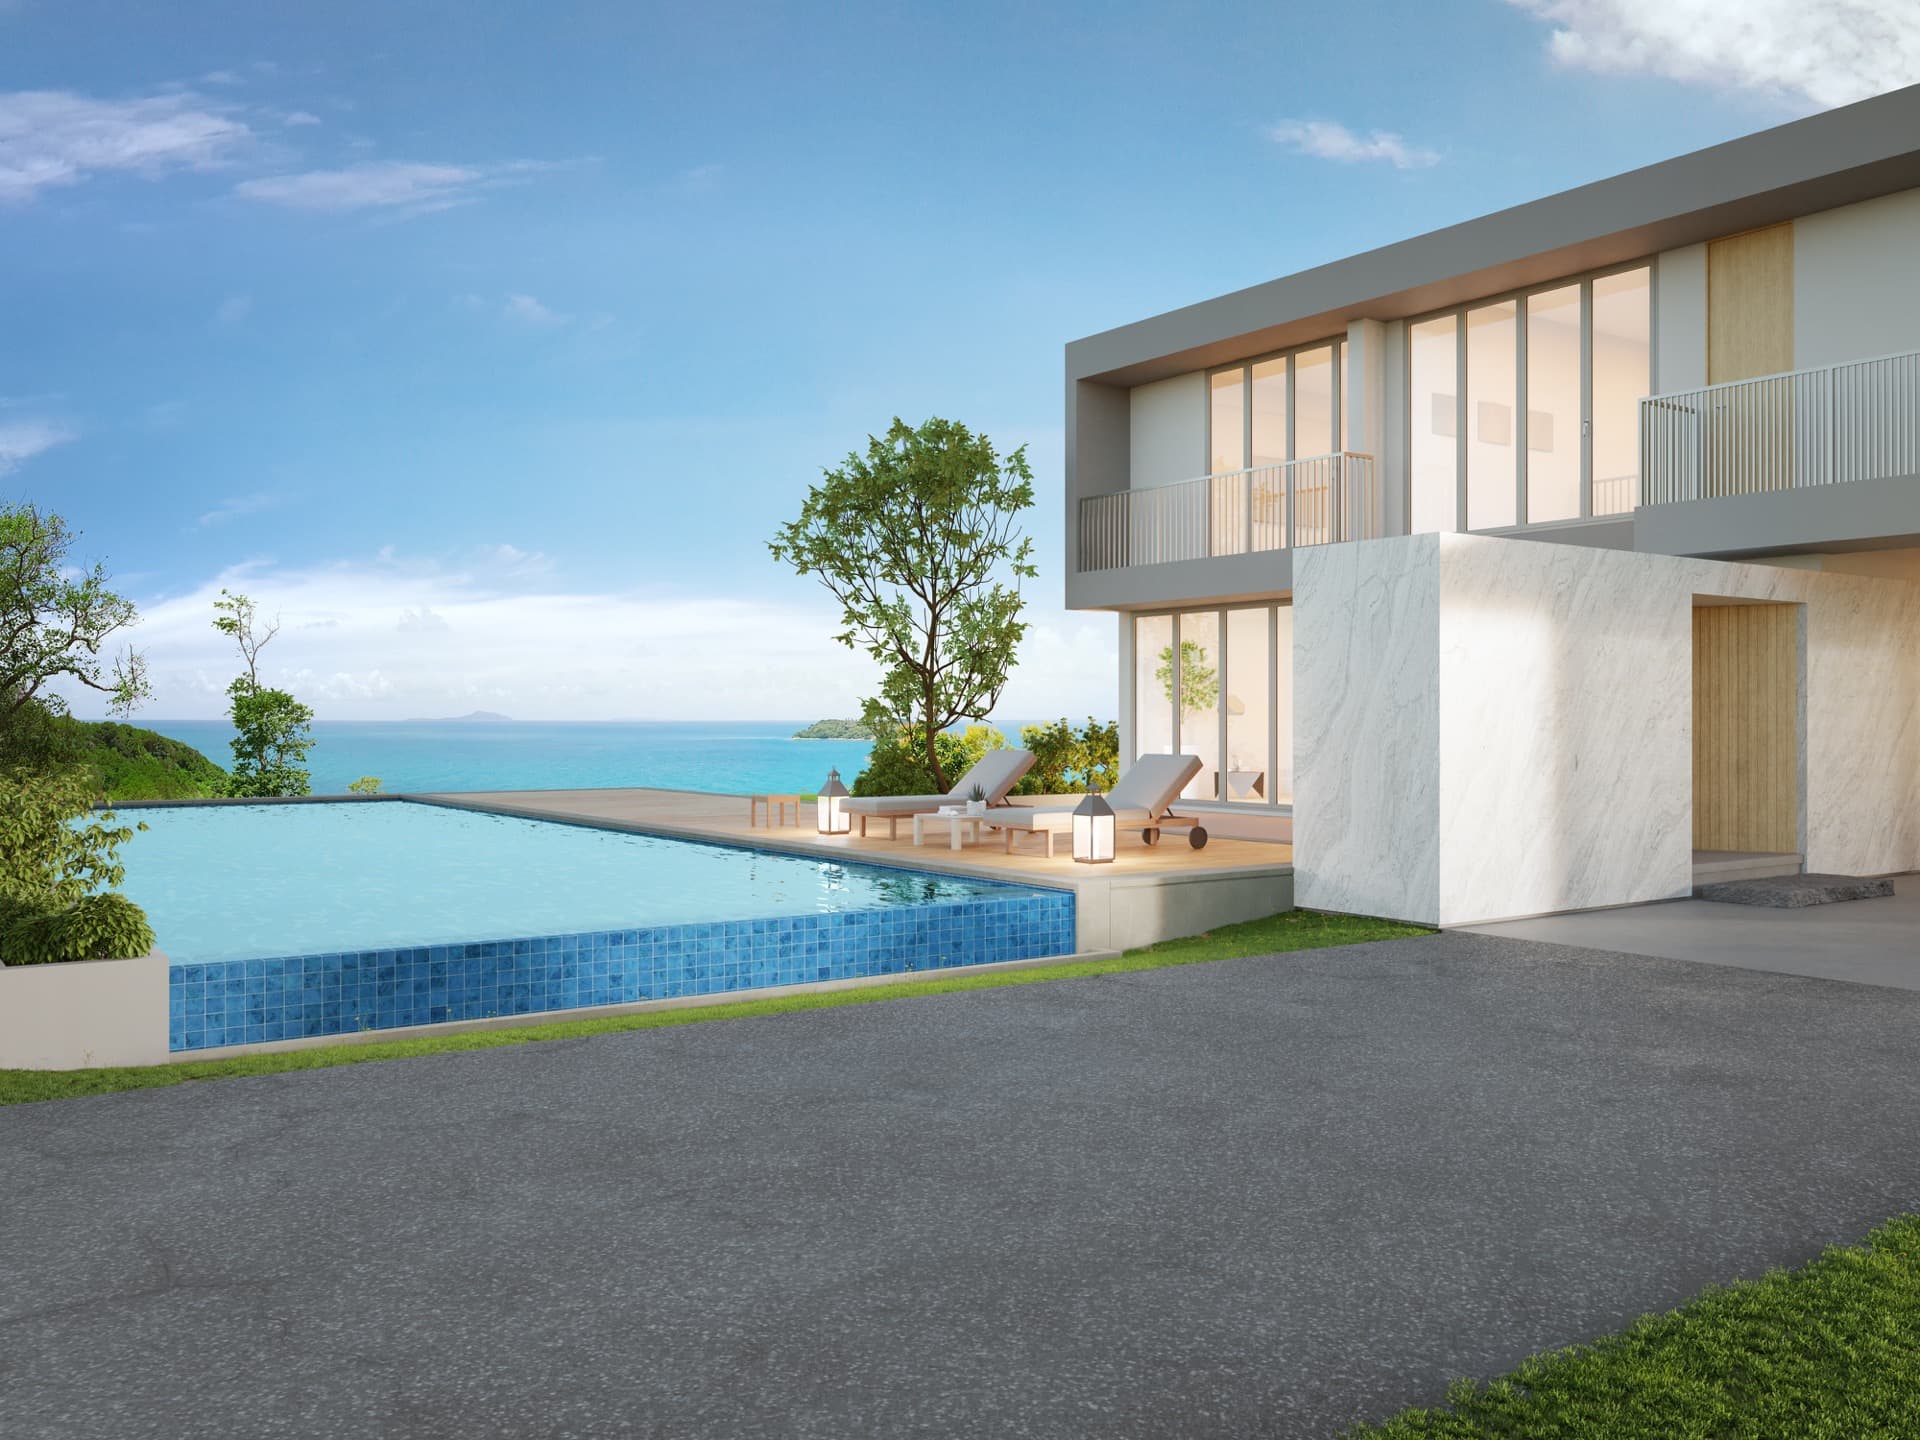 Luxury Beach House With Sea View Swimming Pool Big Garden Modern Design Web